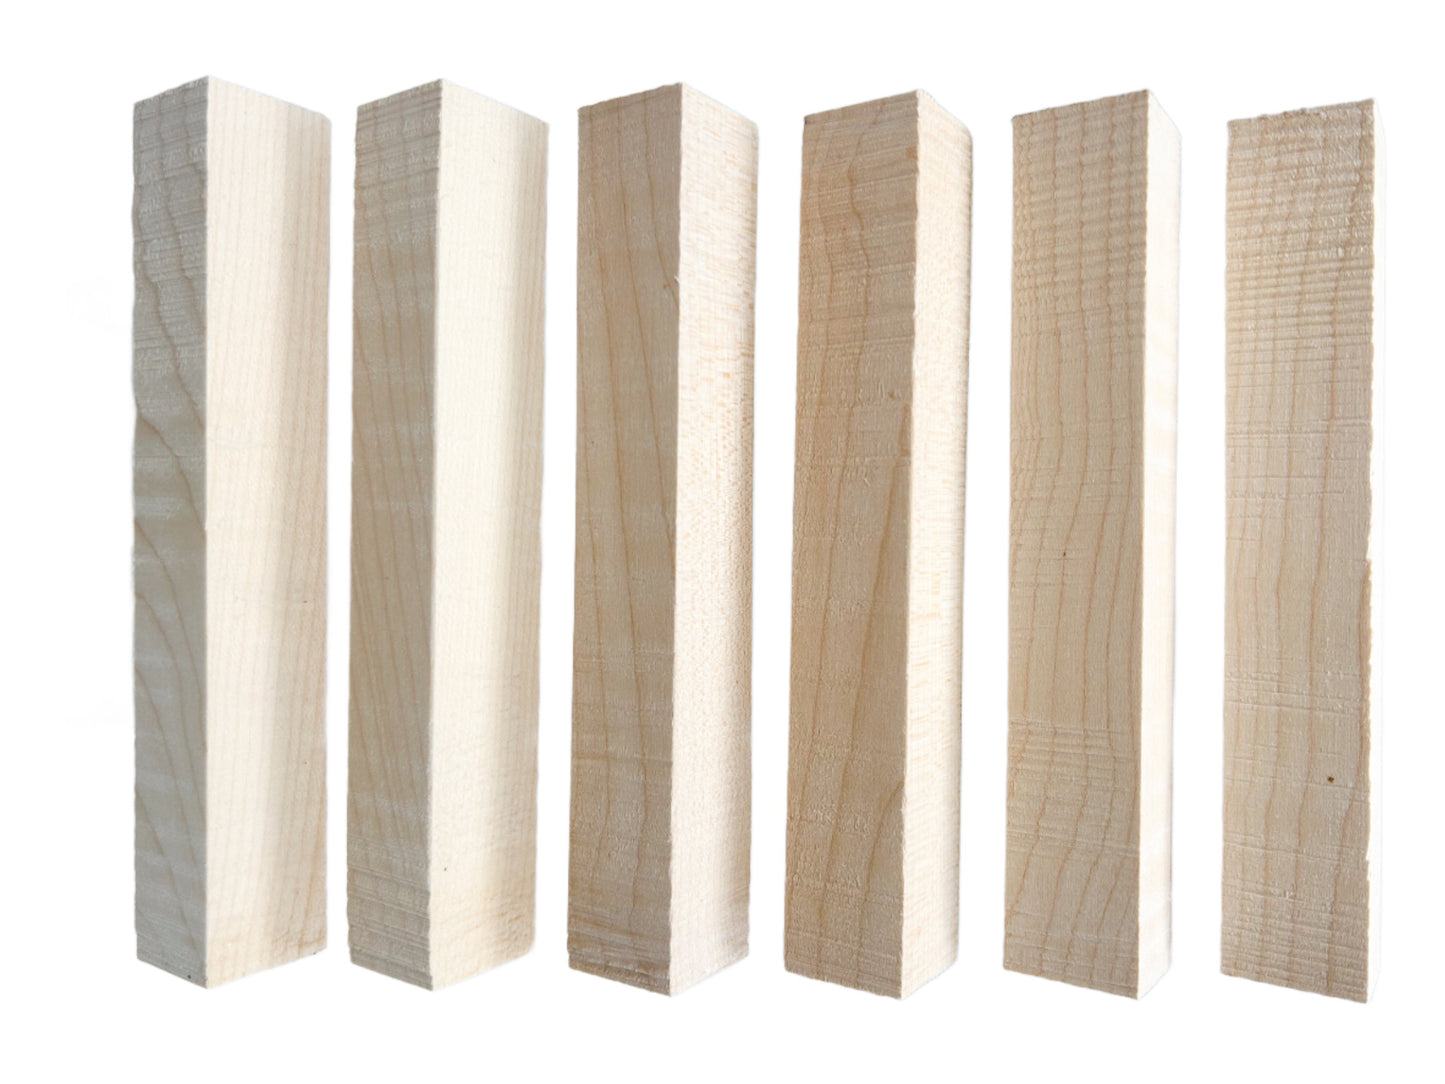 American Maple Wood | Figured | Wooden Pen Blanks